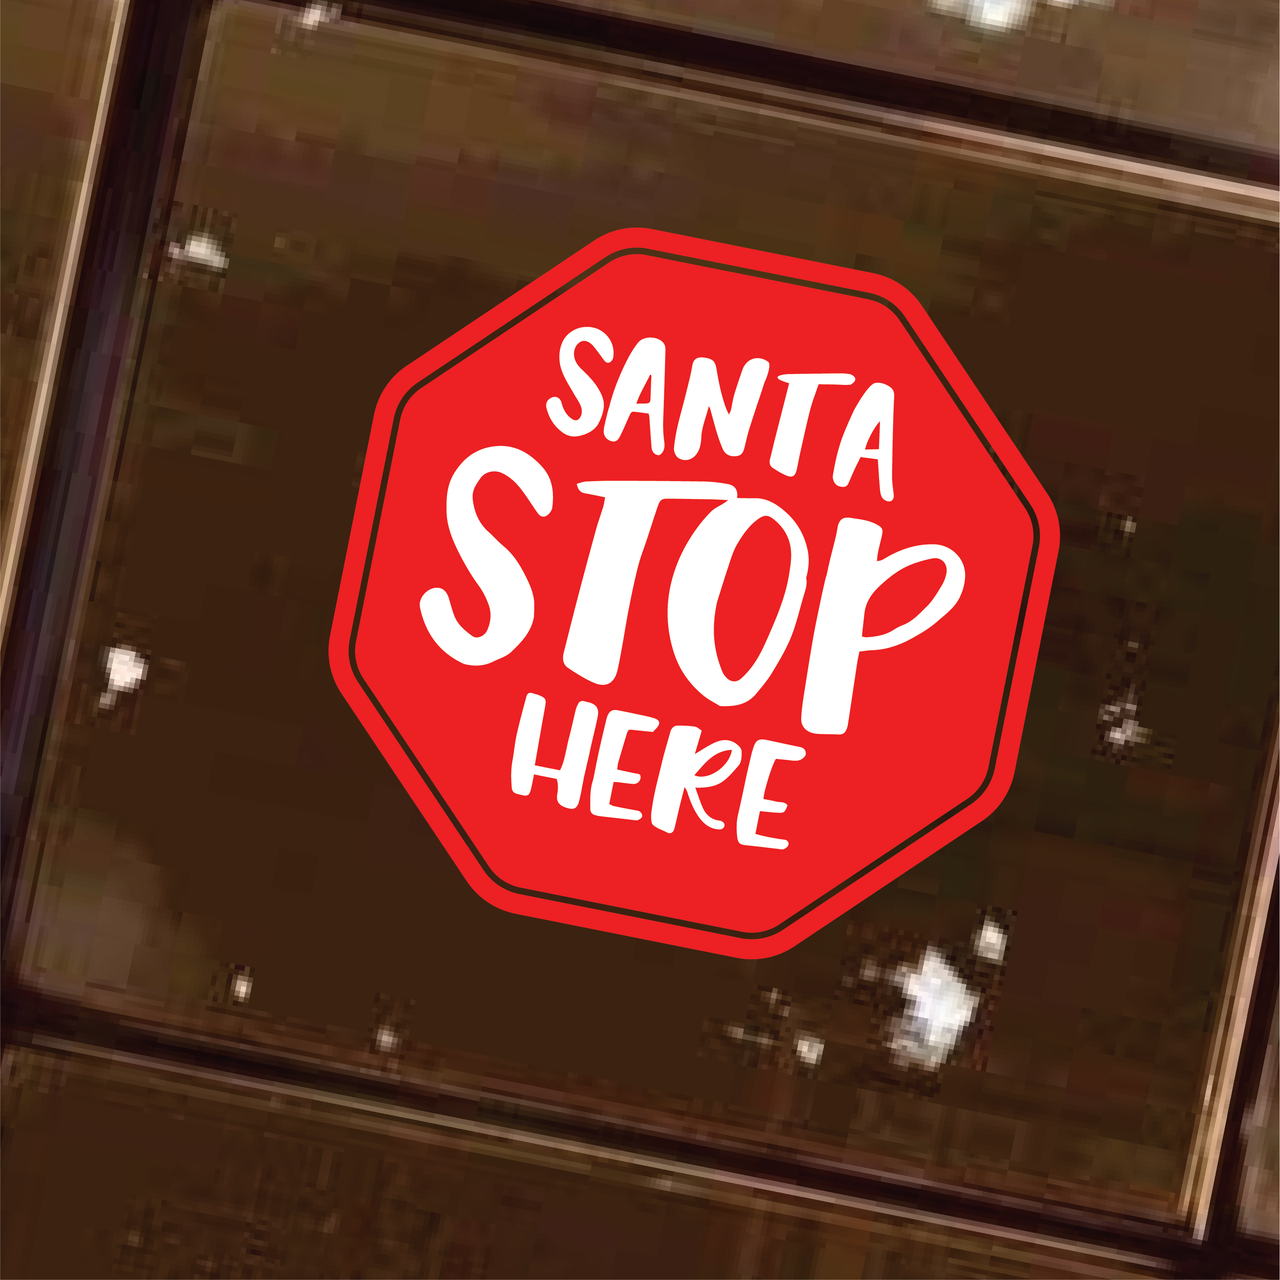 Santa Stop Here Christmas Decal (Type 1)